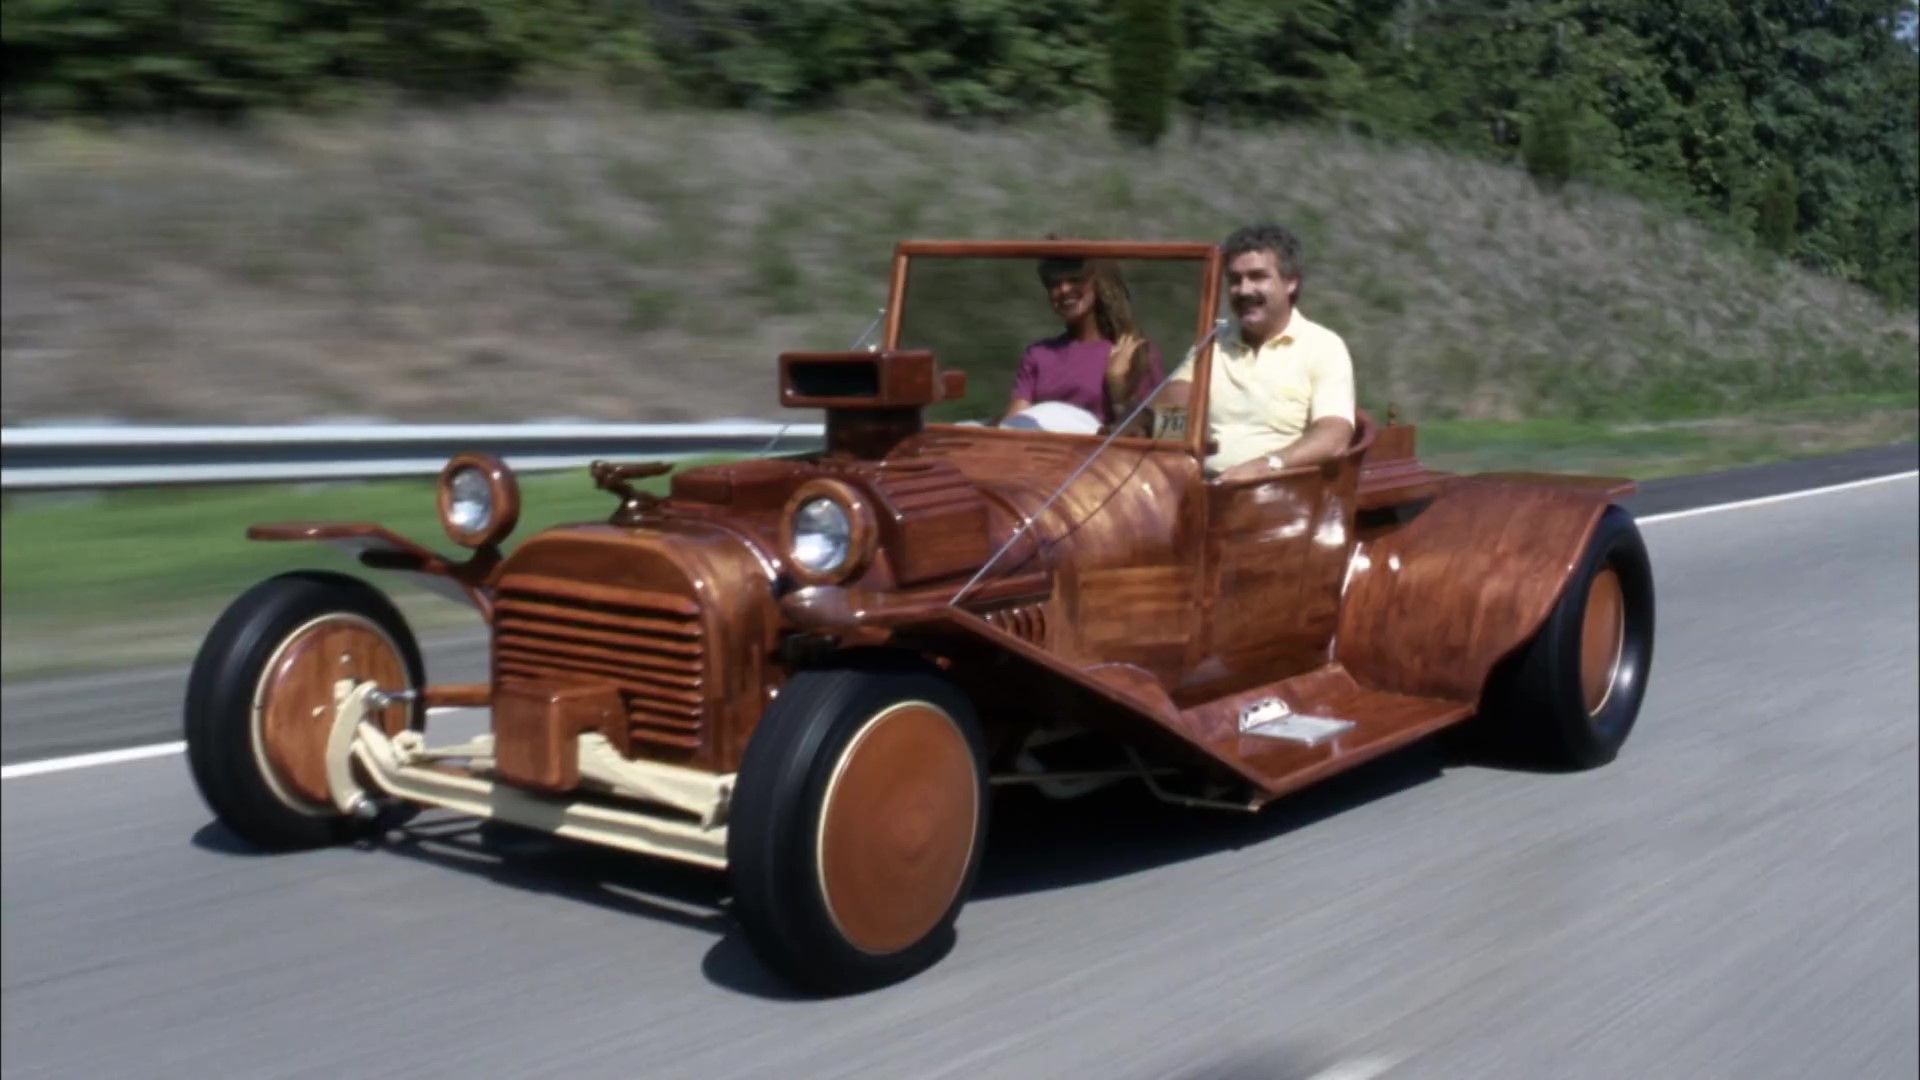 Wayne Allen enjoying a drive in the Wooden-T